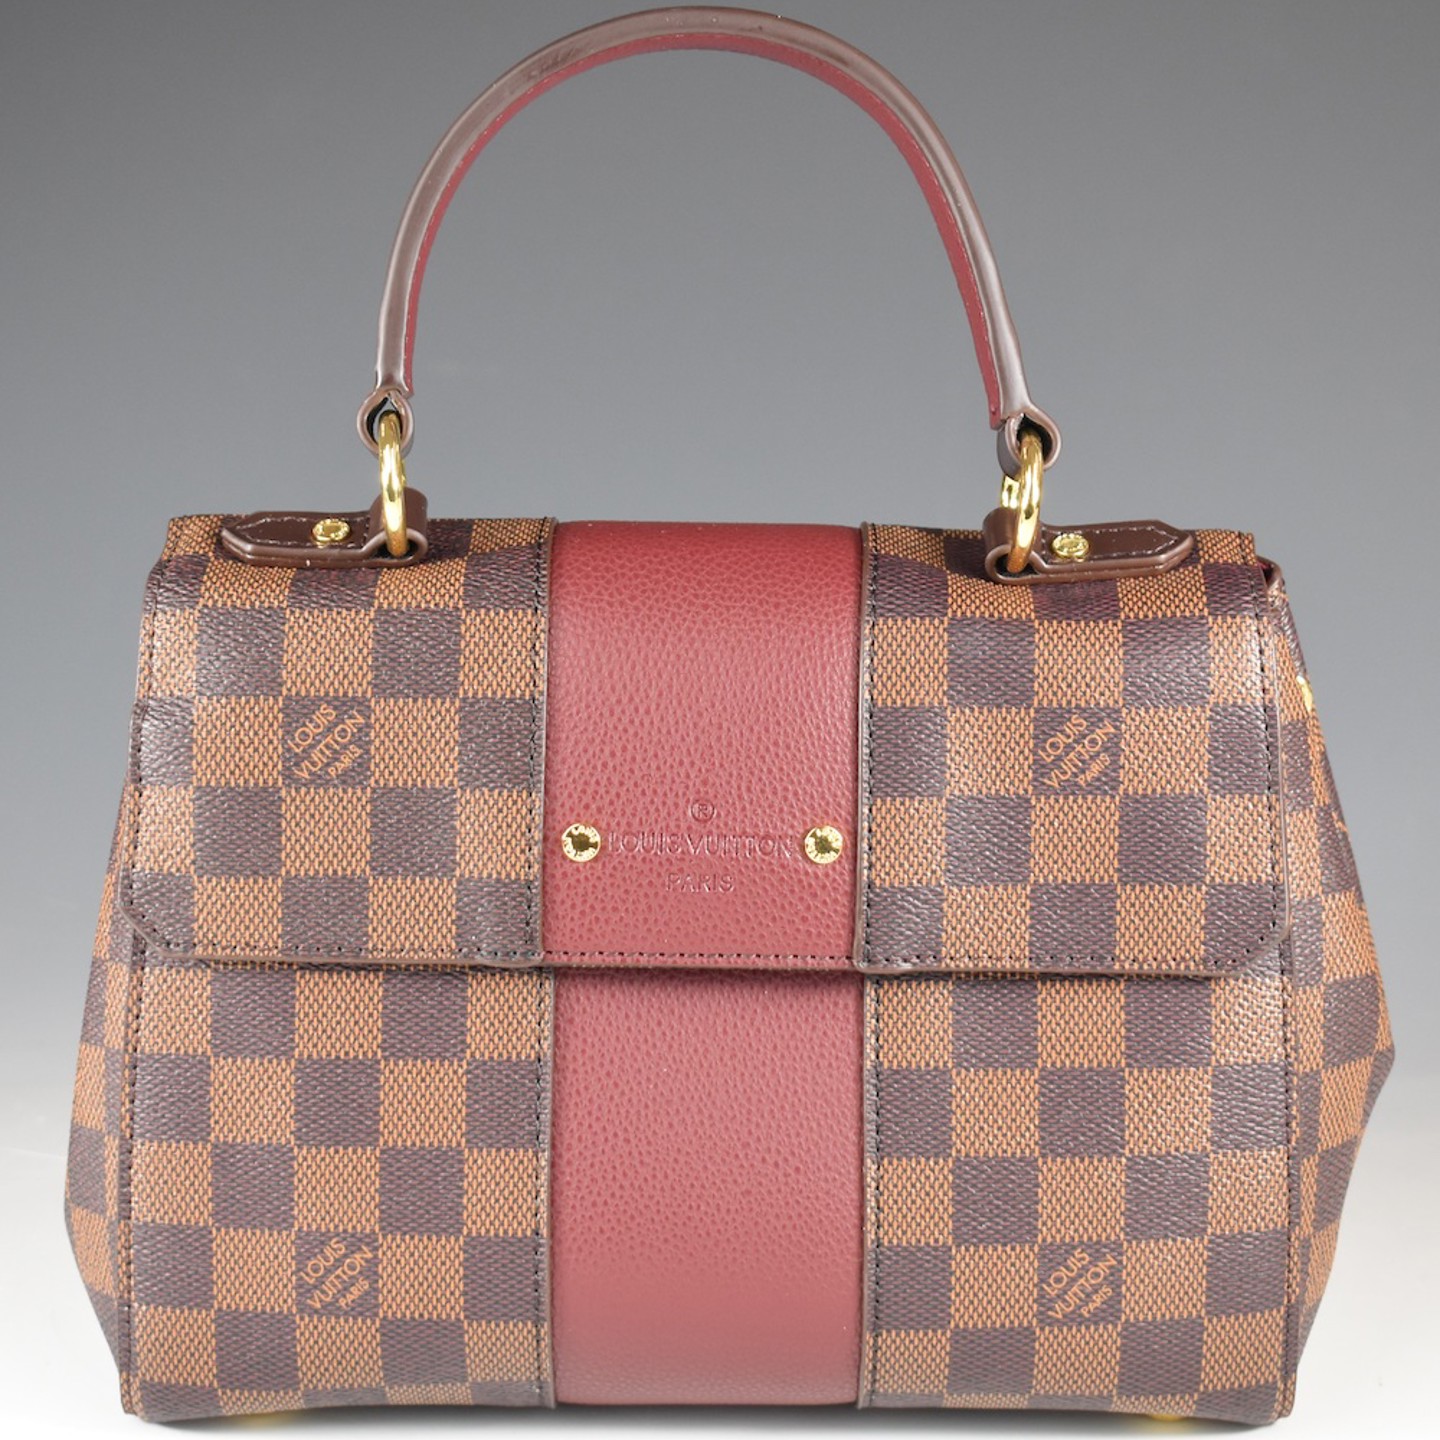 Sold at Auction: Louis Vuitton Damier Ebene Crossbody Bag